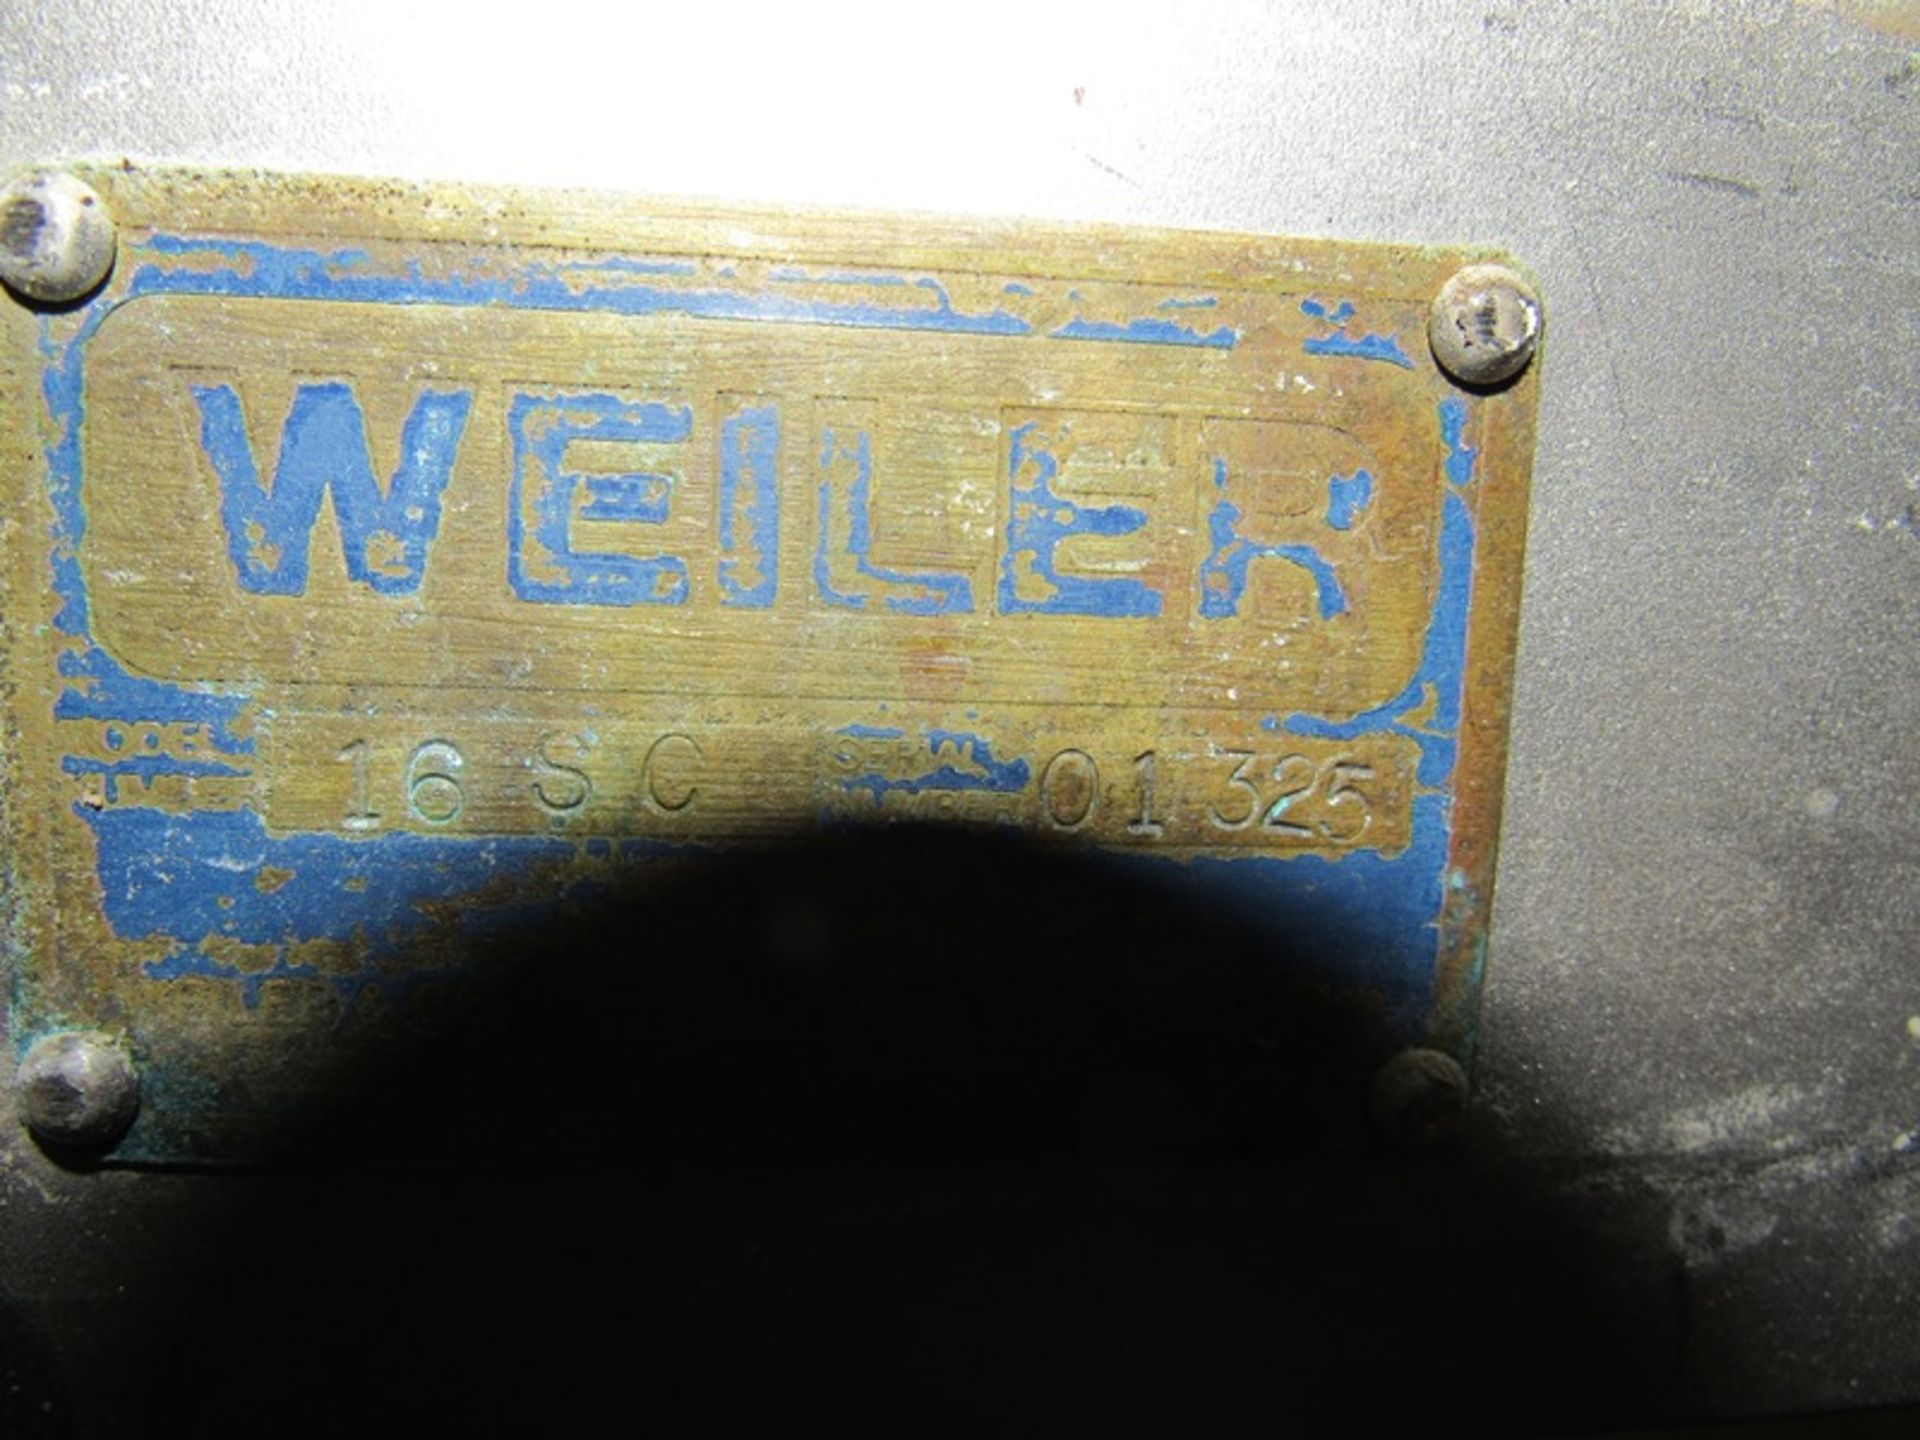 Weiler Stainless Steel Portable Screw Conveyor, 16" Dia. X 18' L screw, 36" W X 30" L X 18" D - Image 6 of 6